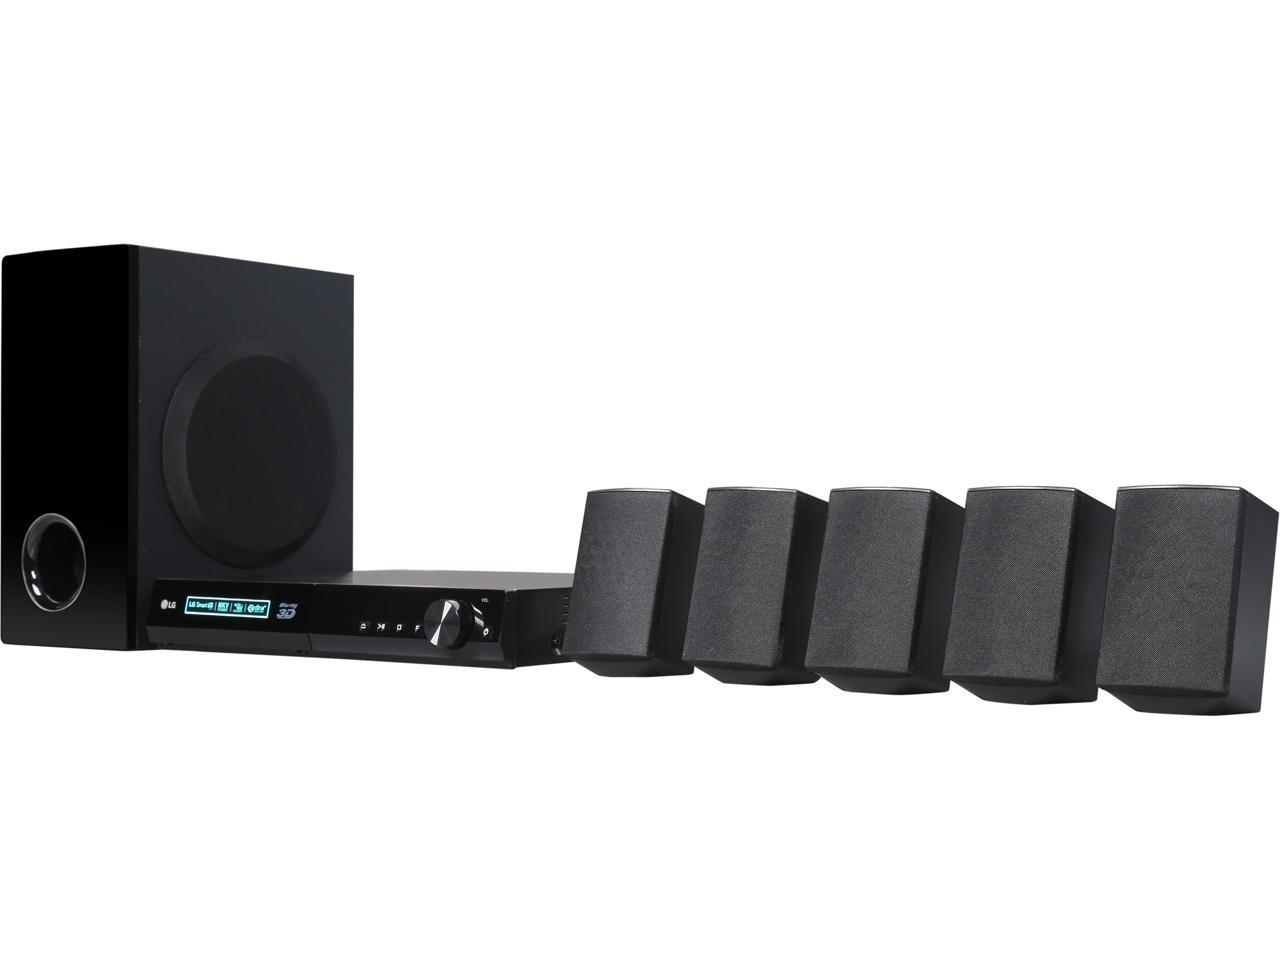 Lg Smart Blu Ray Home Theater System Flash Sales 50 Off Www Gruposincom Es